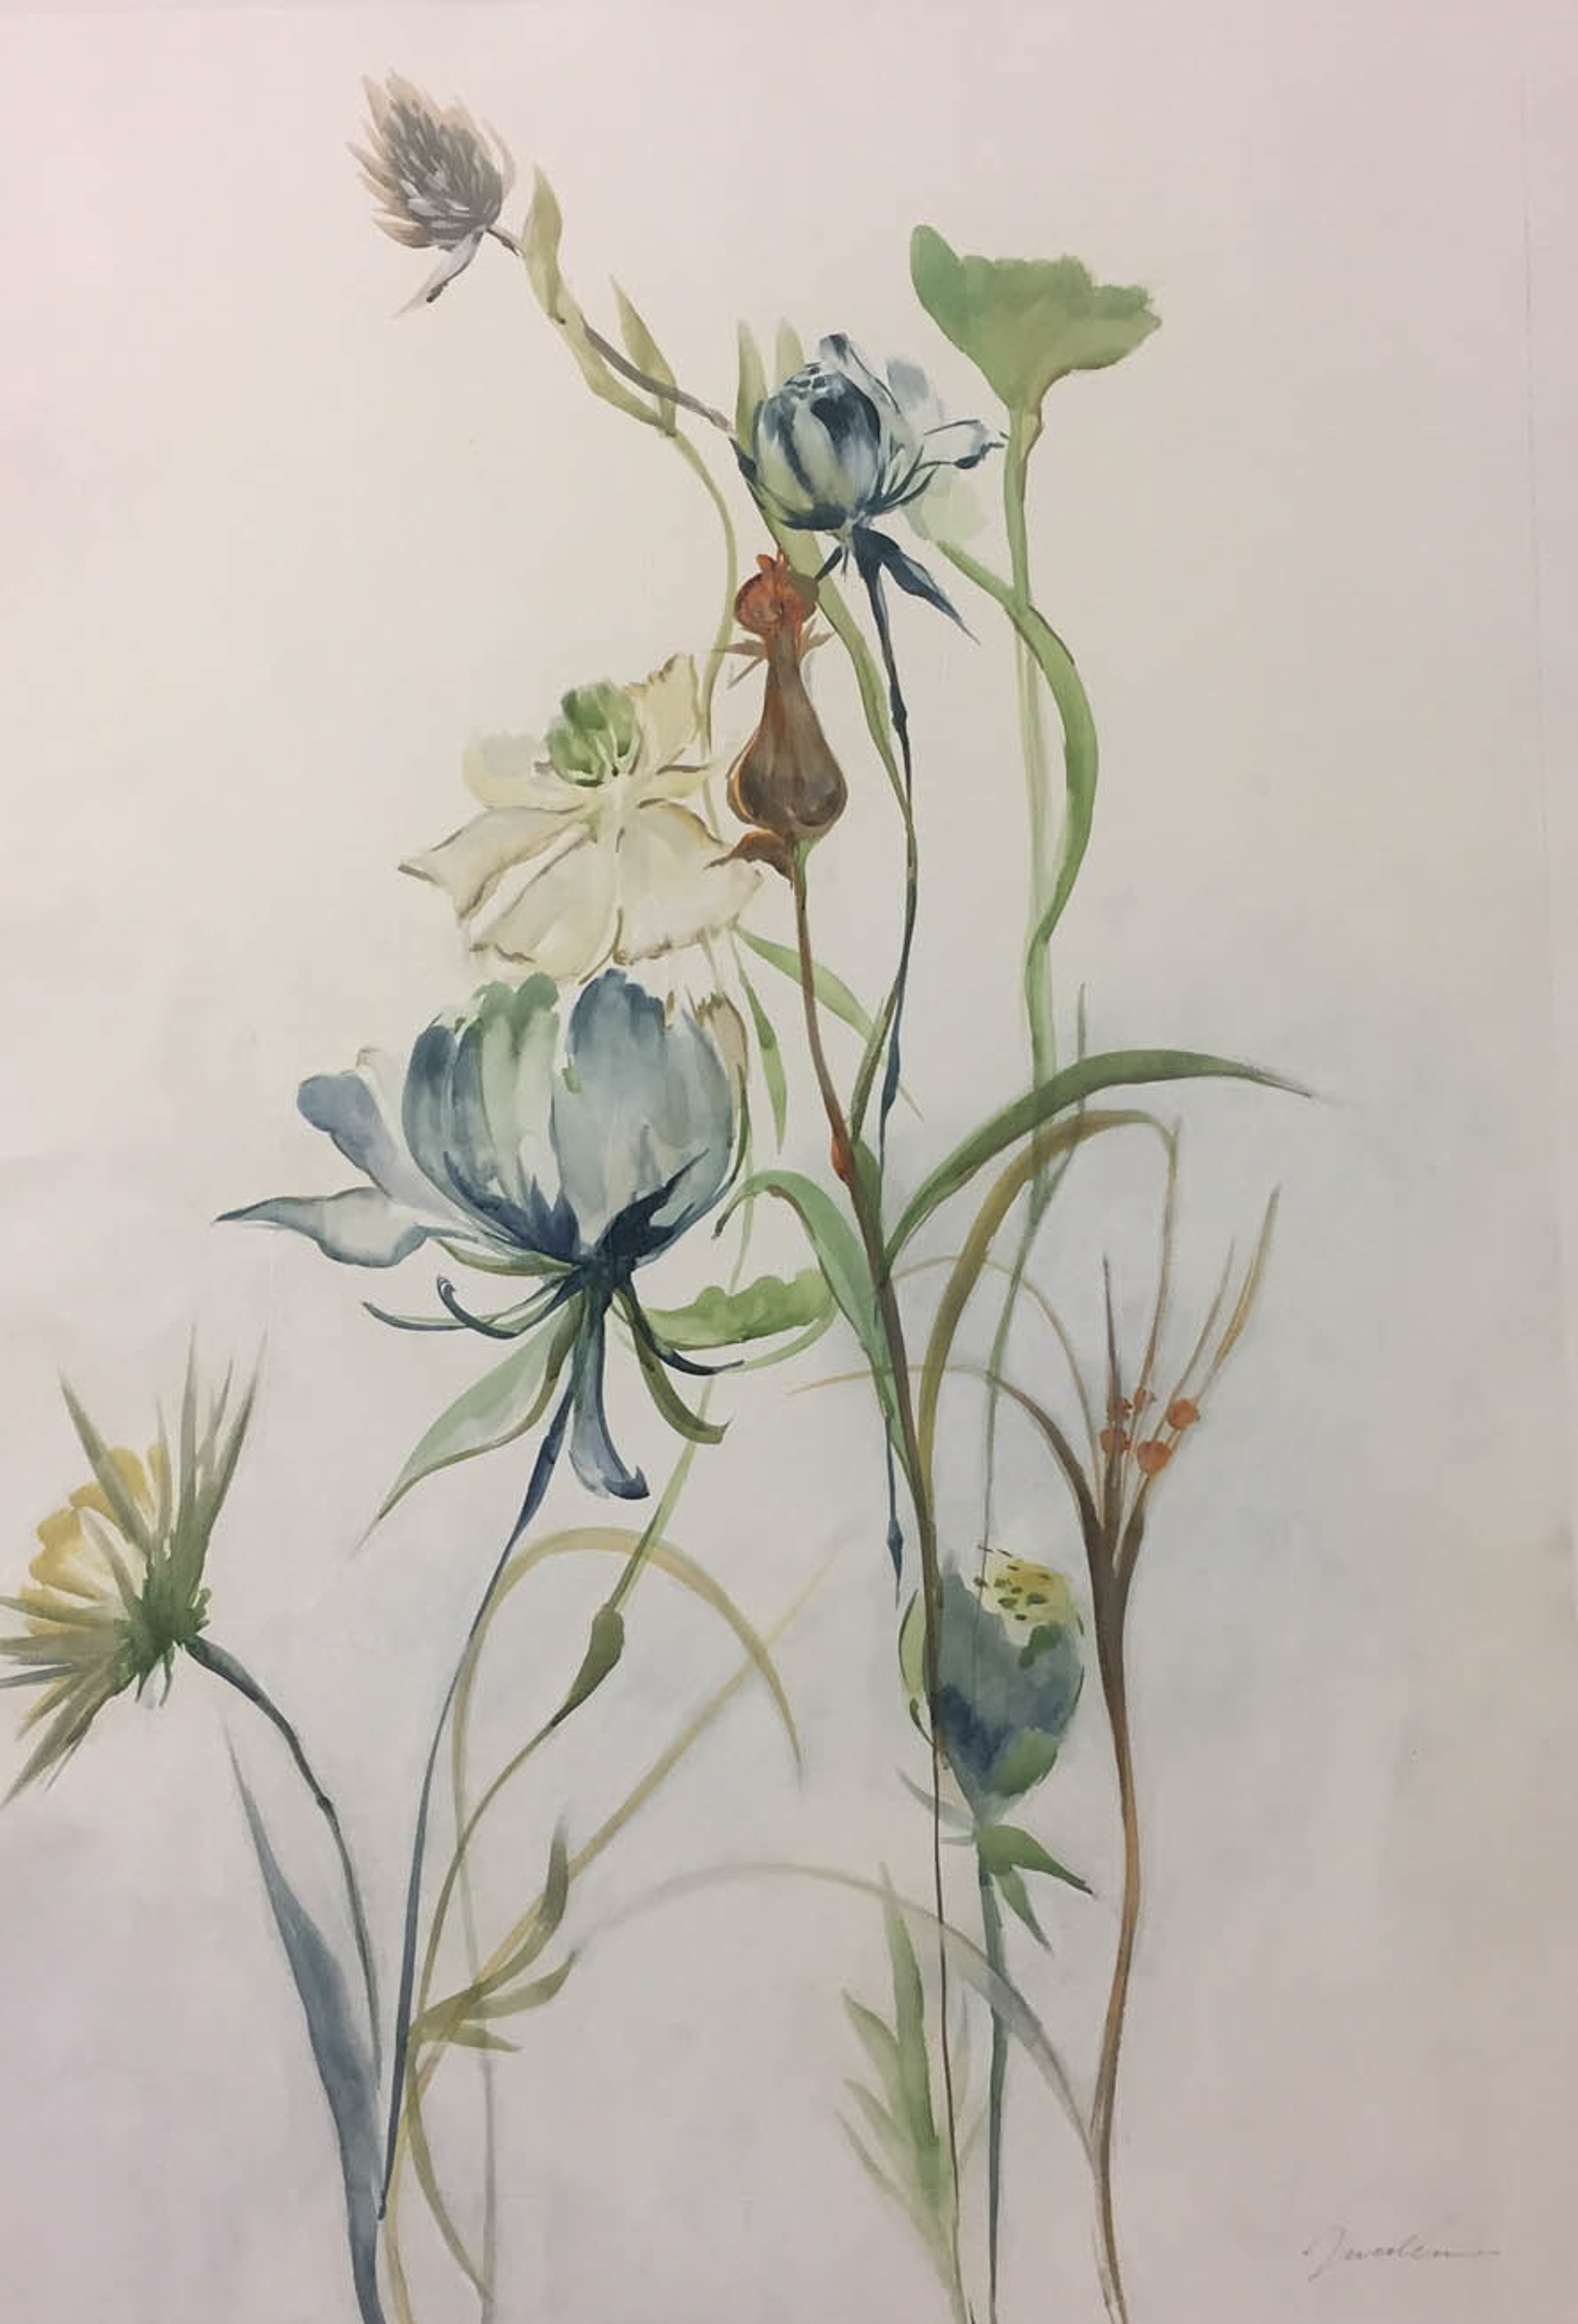 Late Summer Wildflowers 2 by Liz Jardine